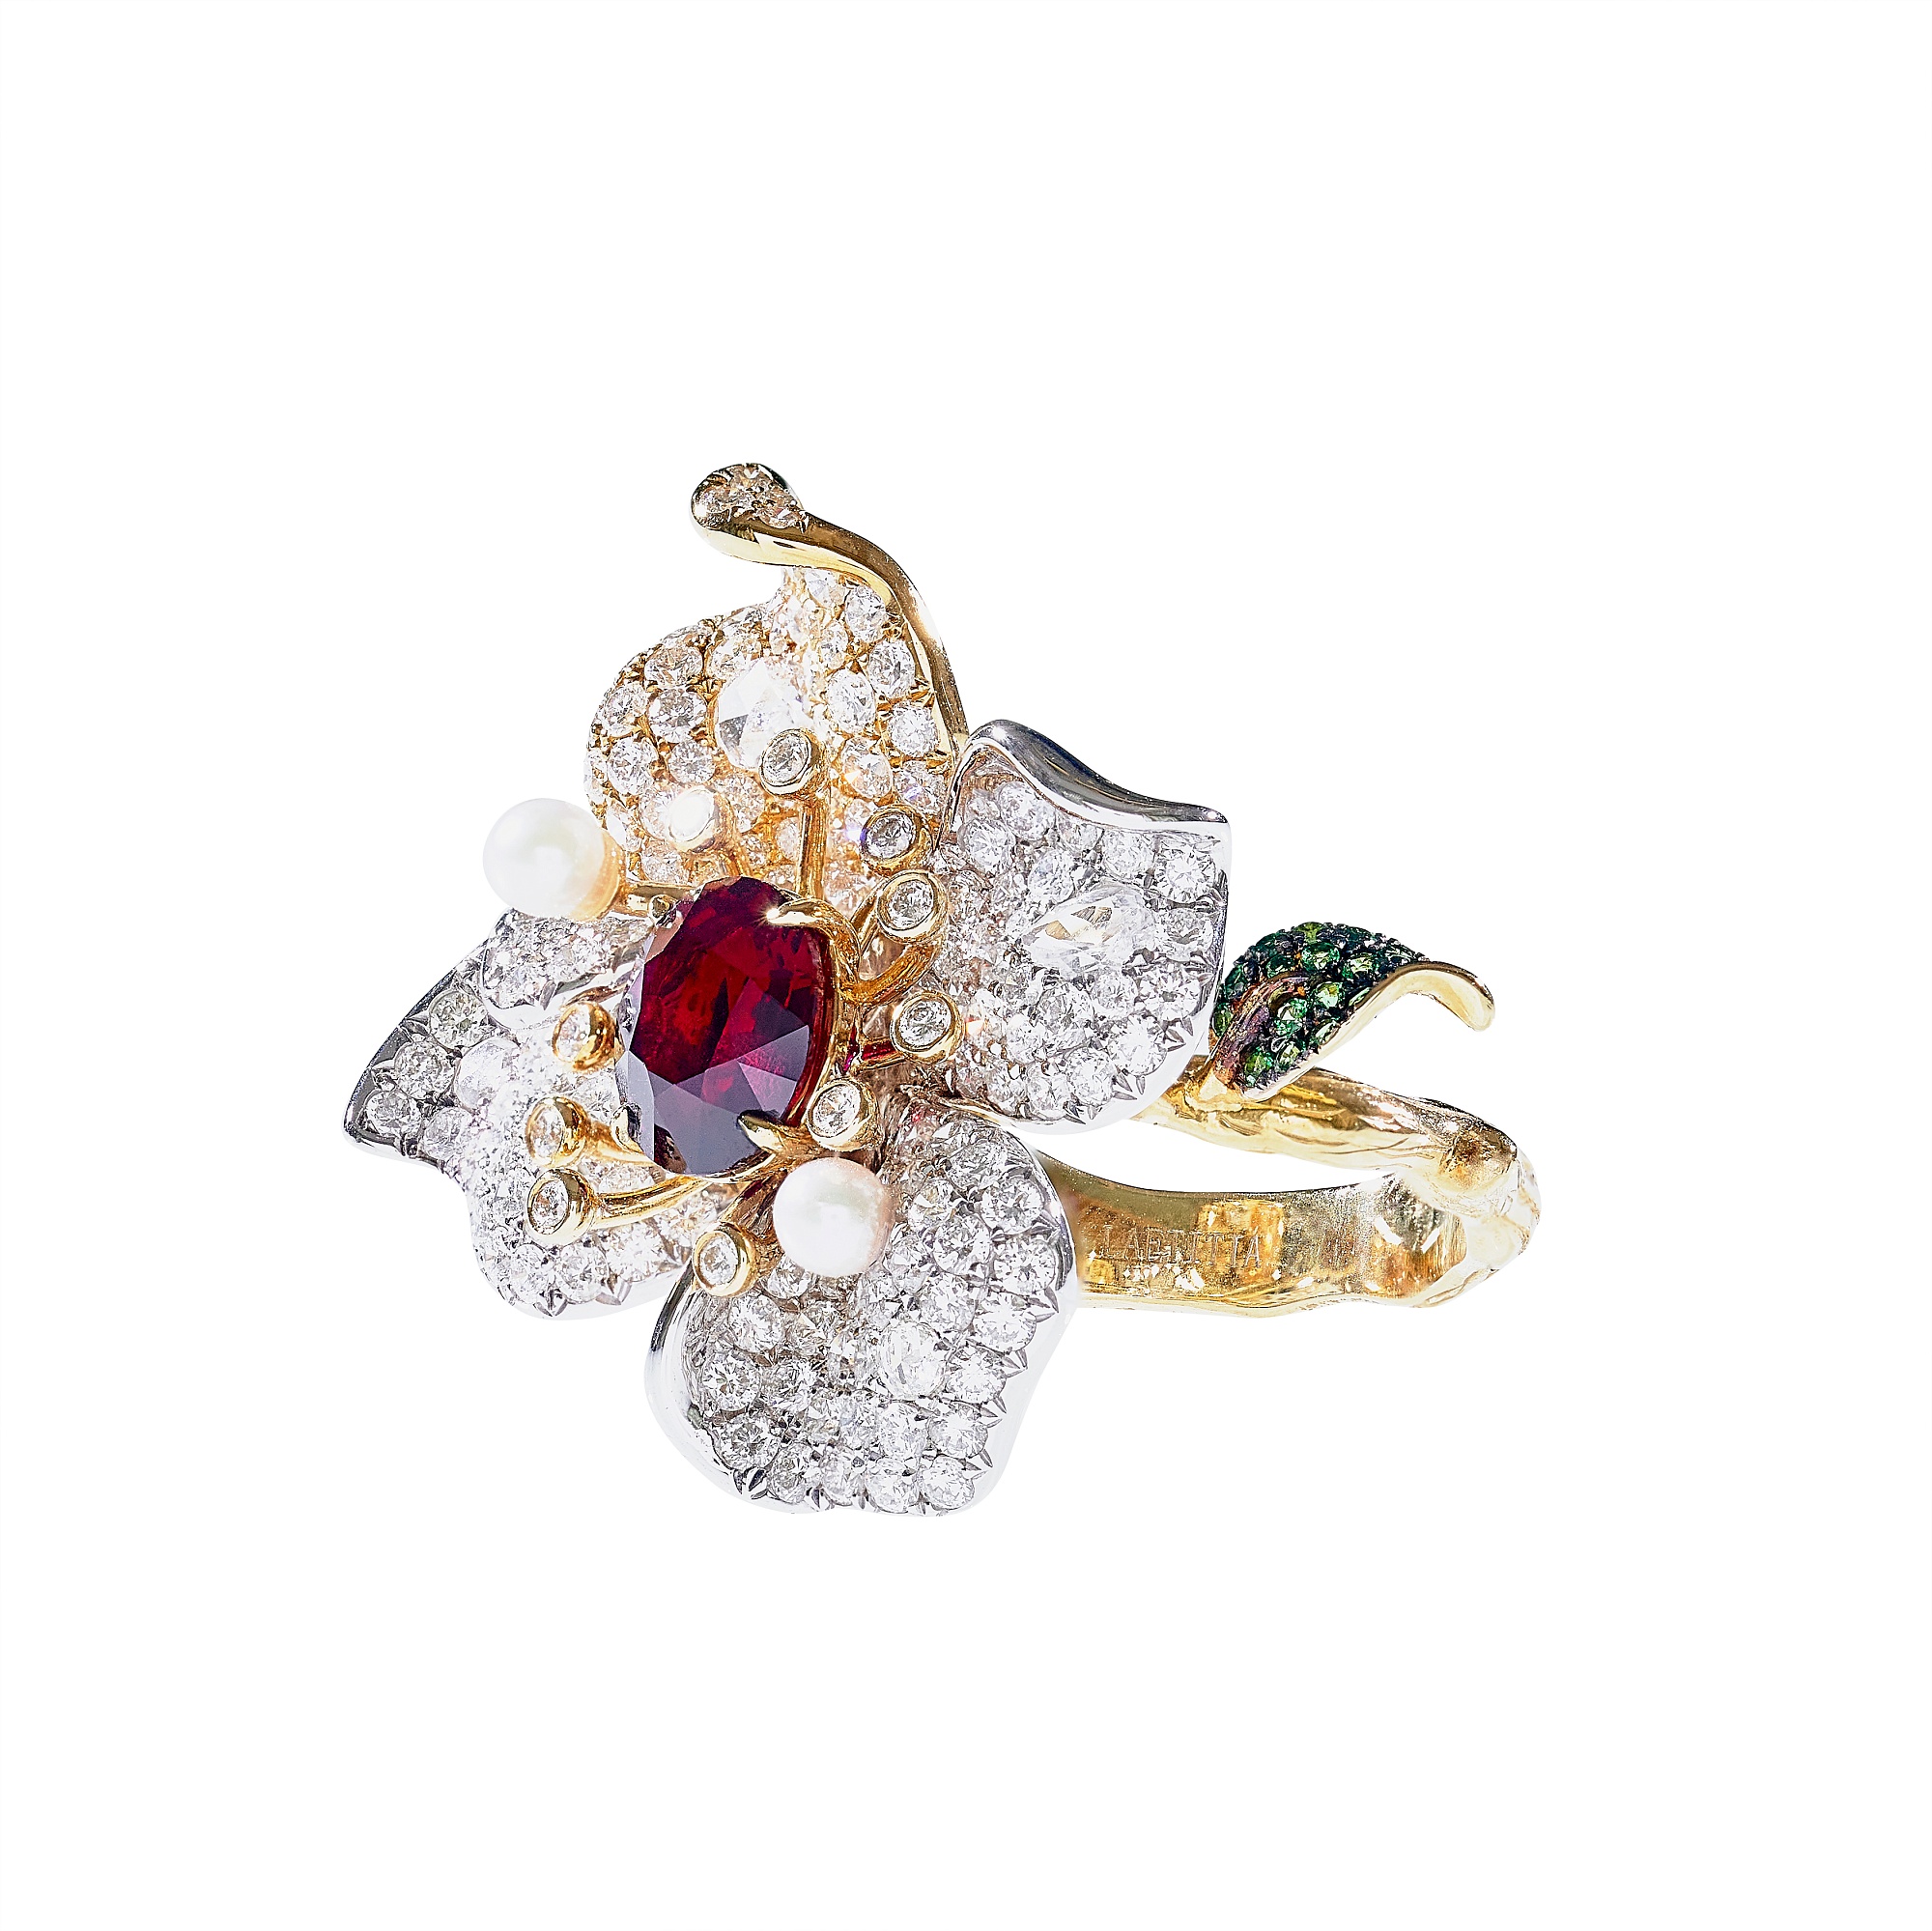 Ring collection Oriental Garden, LAETITIA, Ruby, Diamonds, Garnets, Sapphires, Pearl, 18K Gold | Photo 2